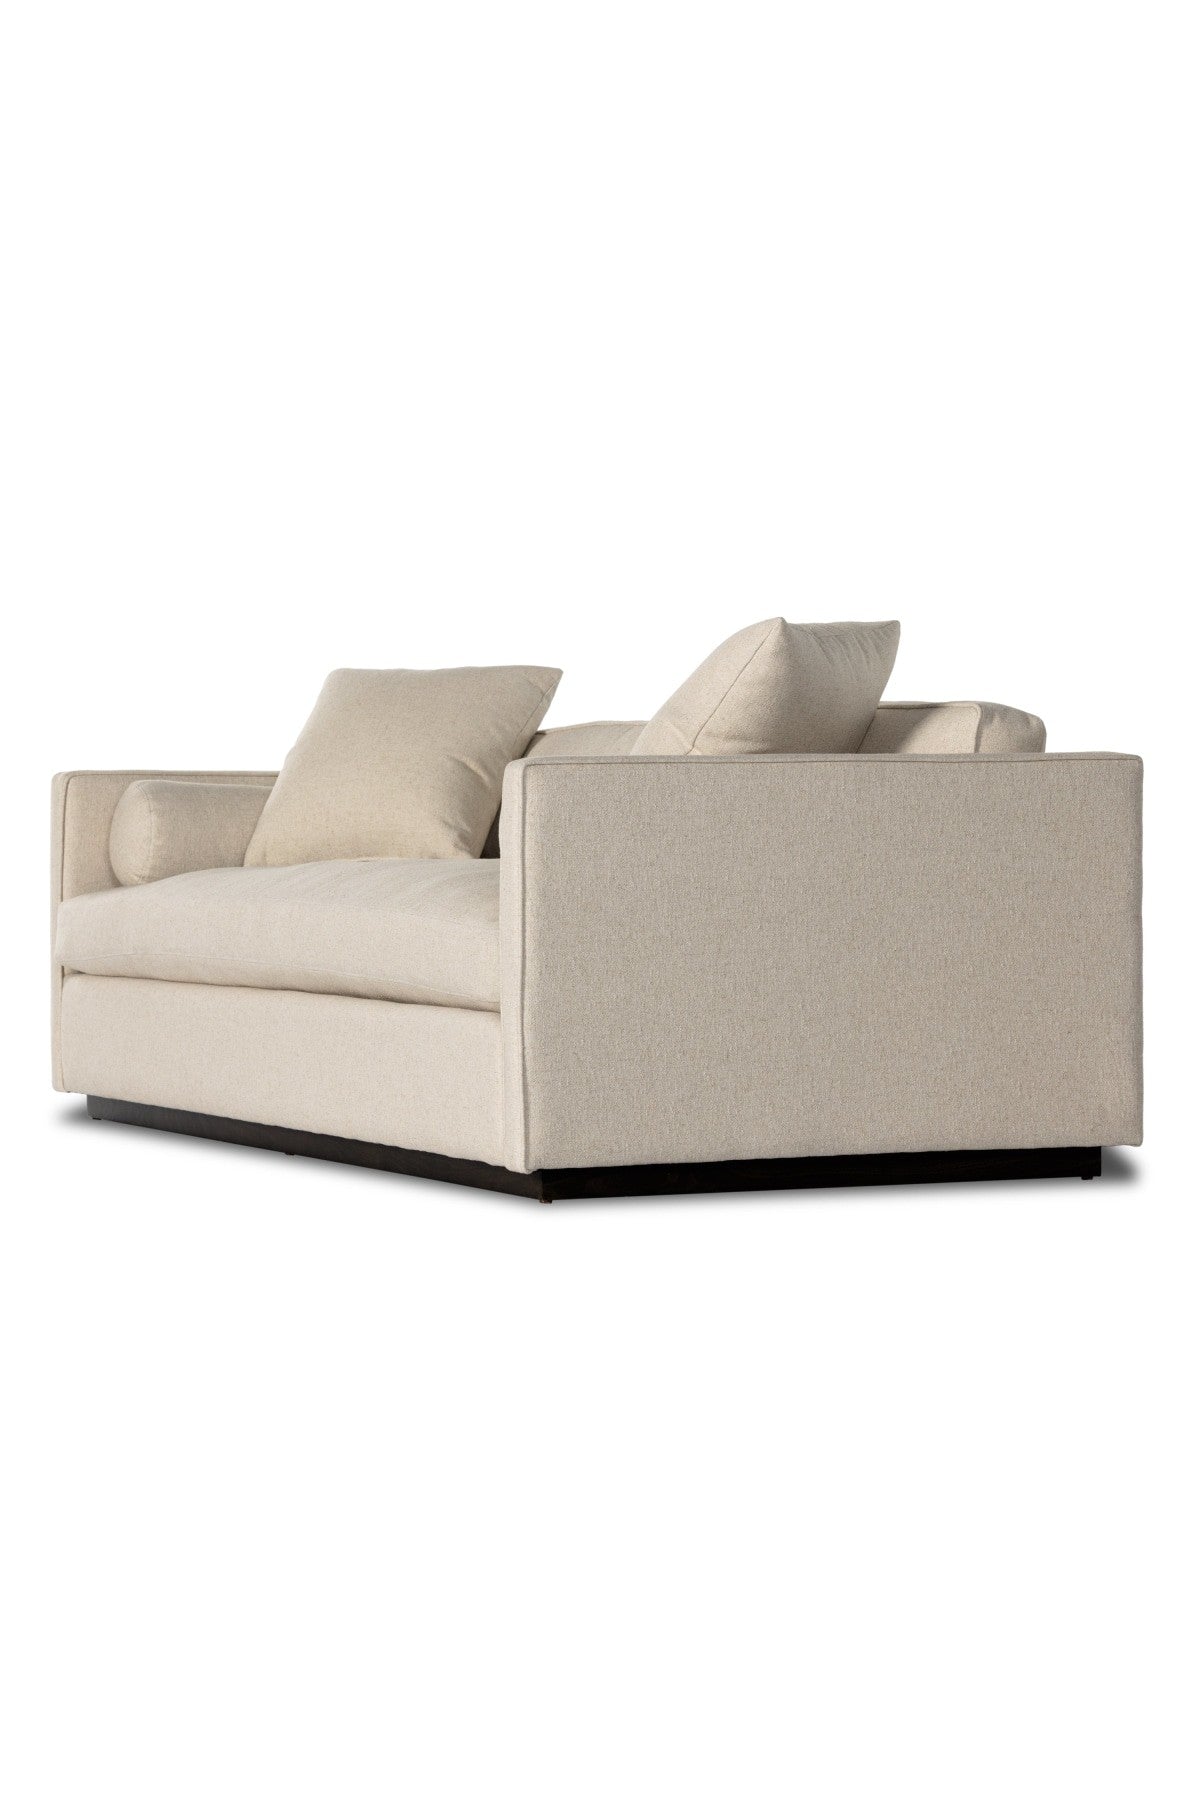 Bushnell Sofa